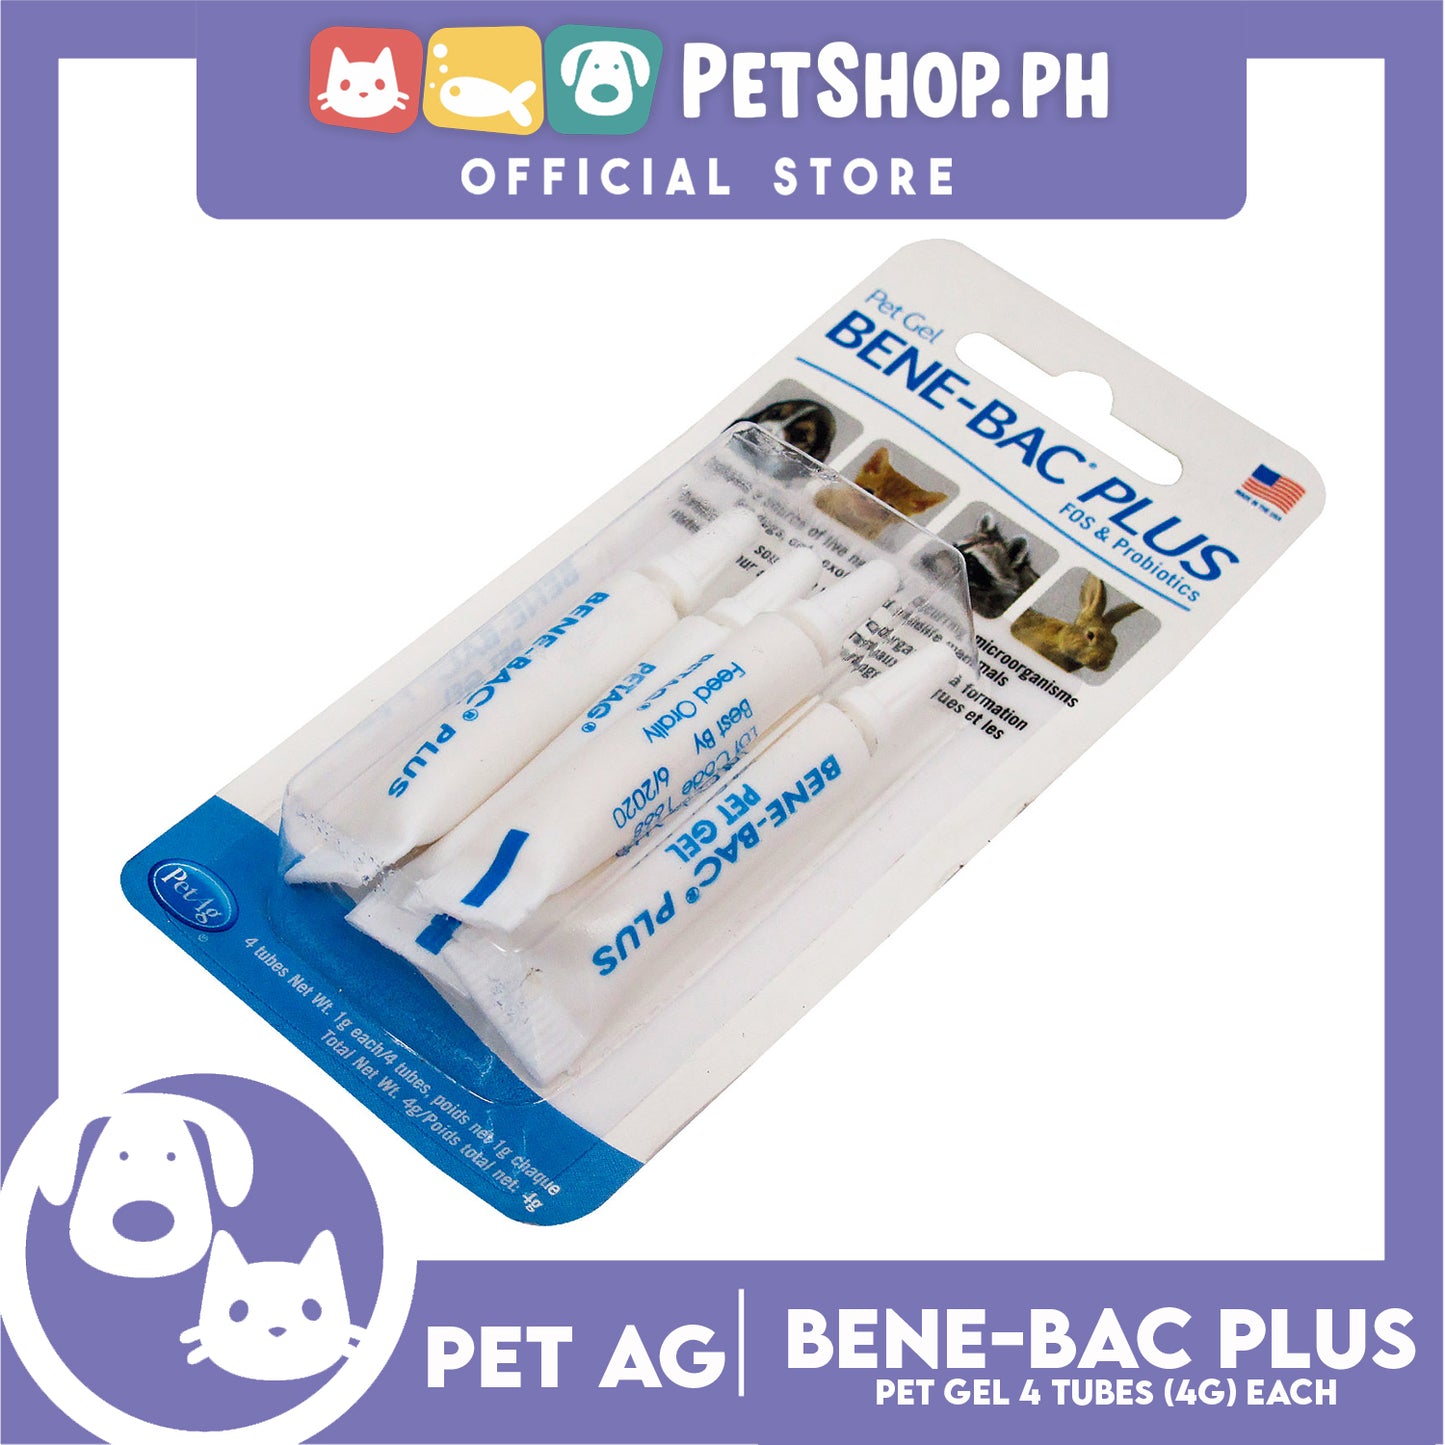 Pet Ag Bene-Bac Plus FOS and Probiotics 4g Pet Gel Set of 4 Tubes